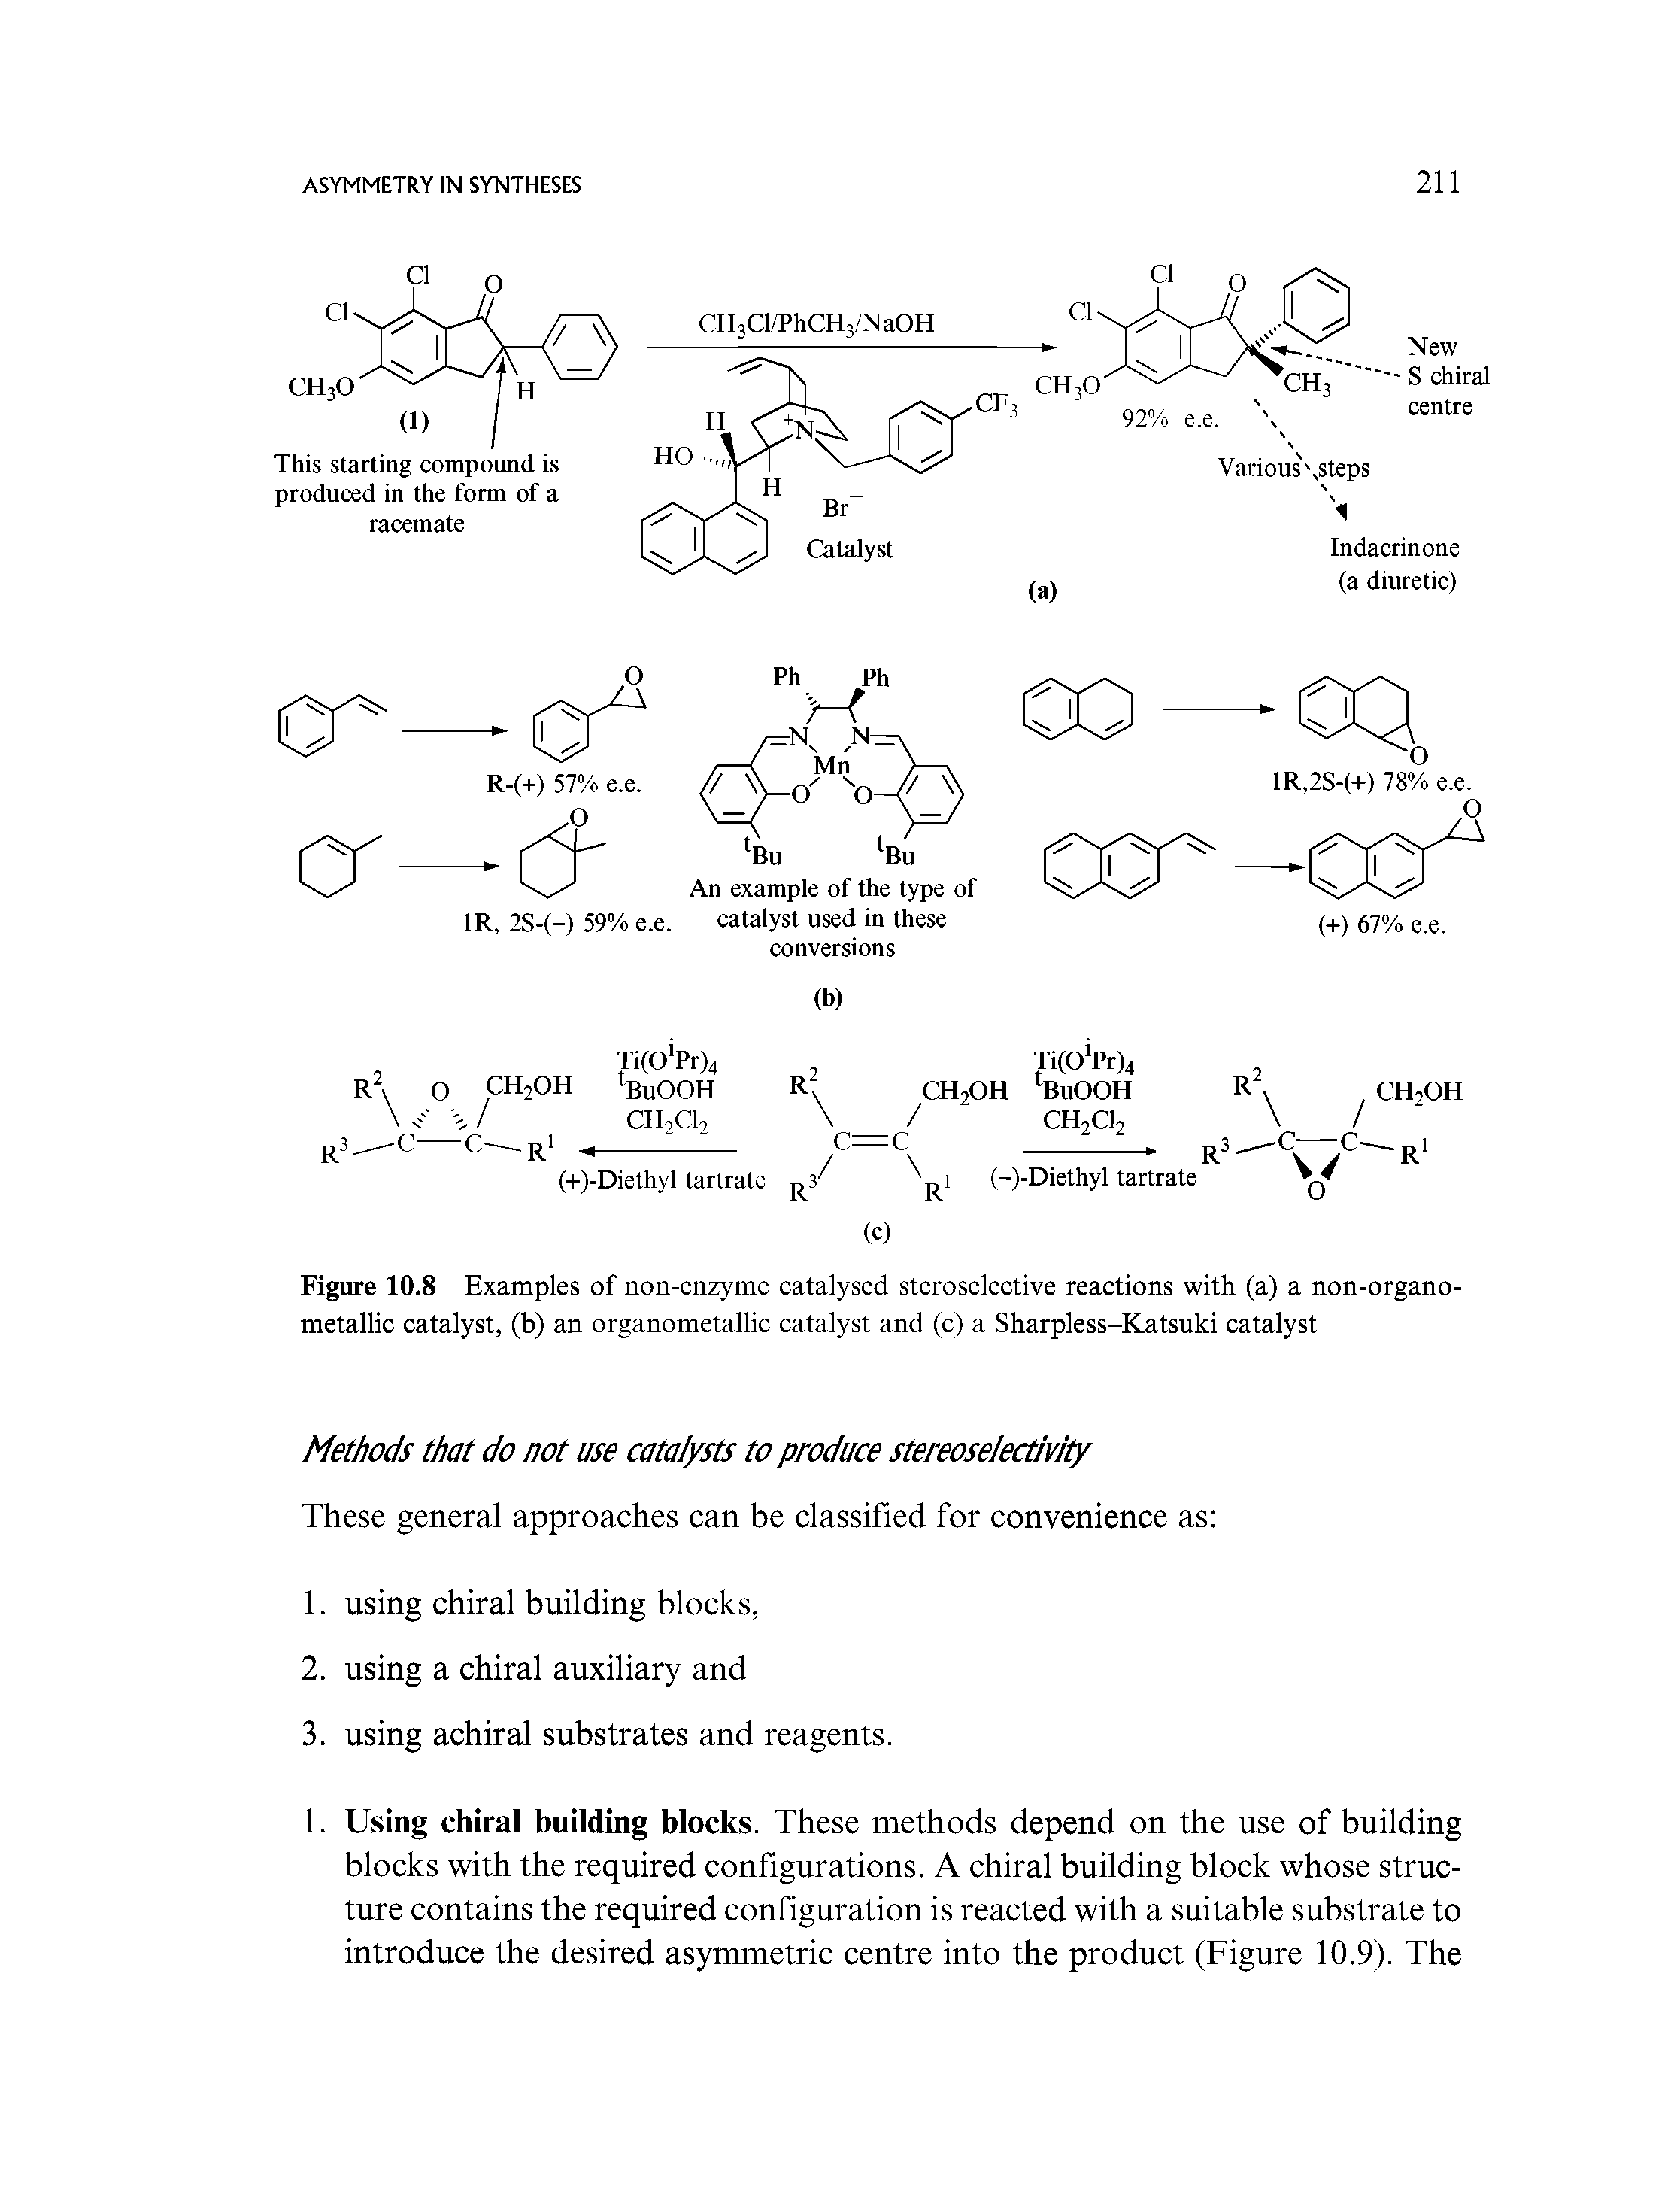 Figure 10.8 Examples of non-enzyme catalysed steroselective reactions with (a) a non-organo-metallic catalyst, (b) an organometallic catalyst and (c) a Sharpless-Katsuki catalyst...